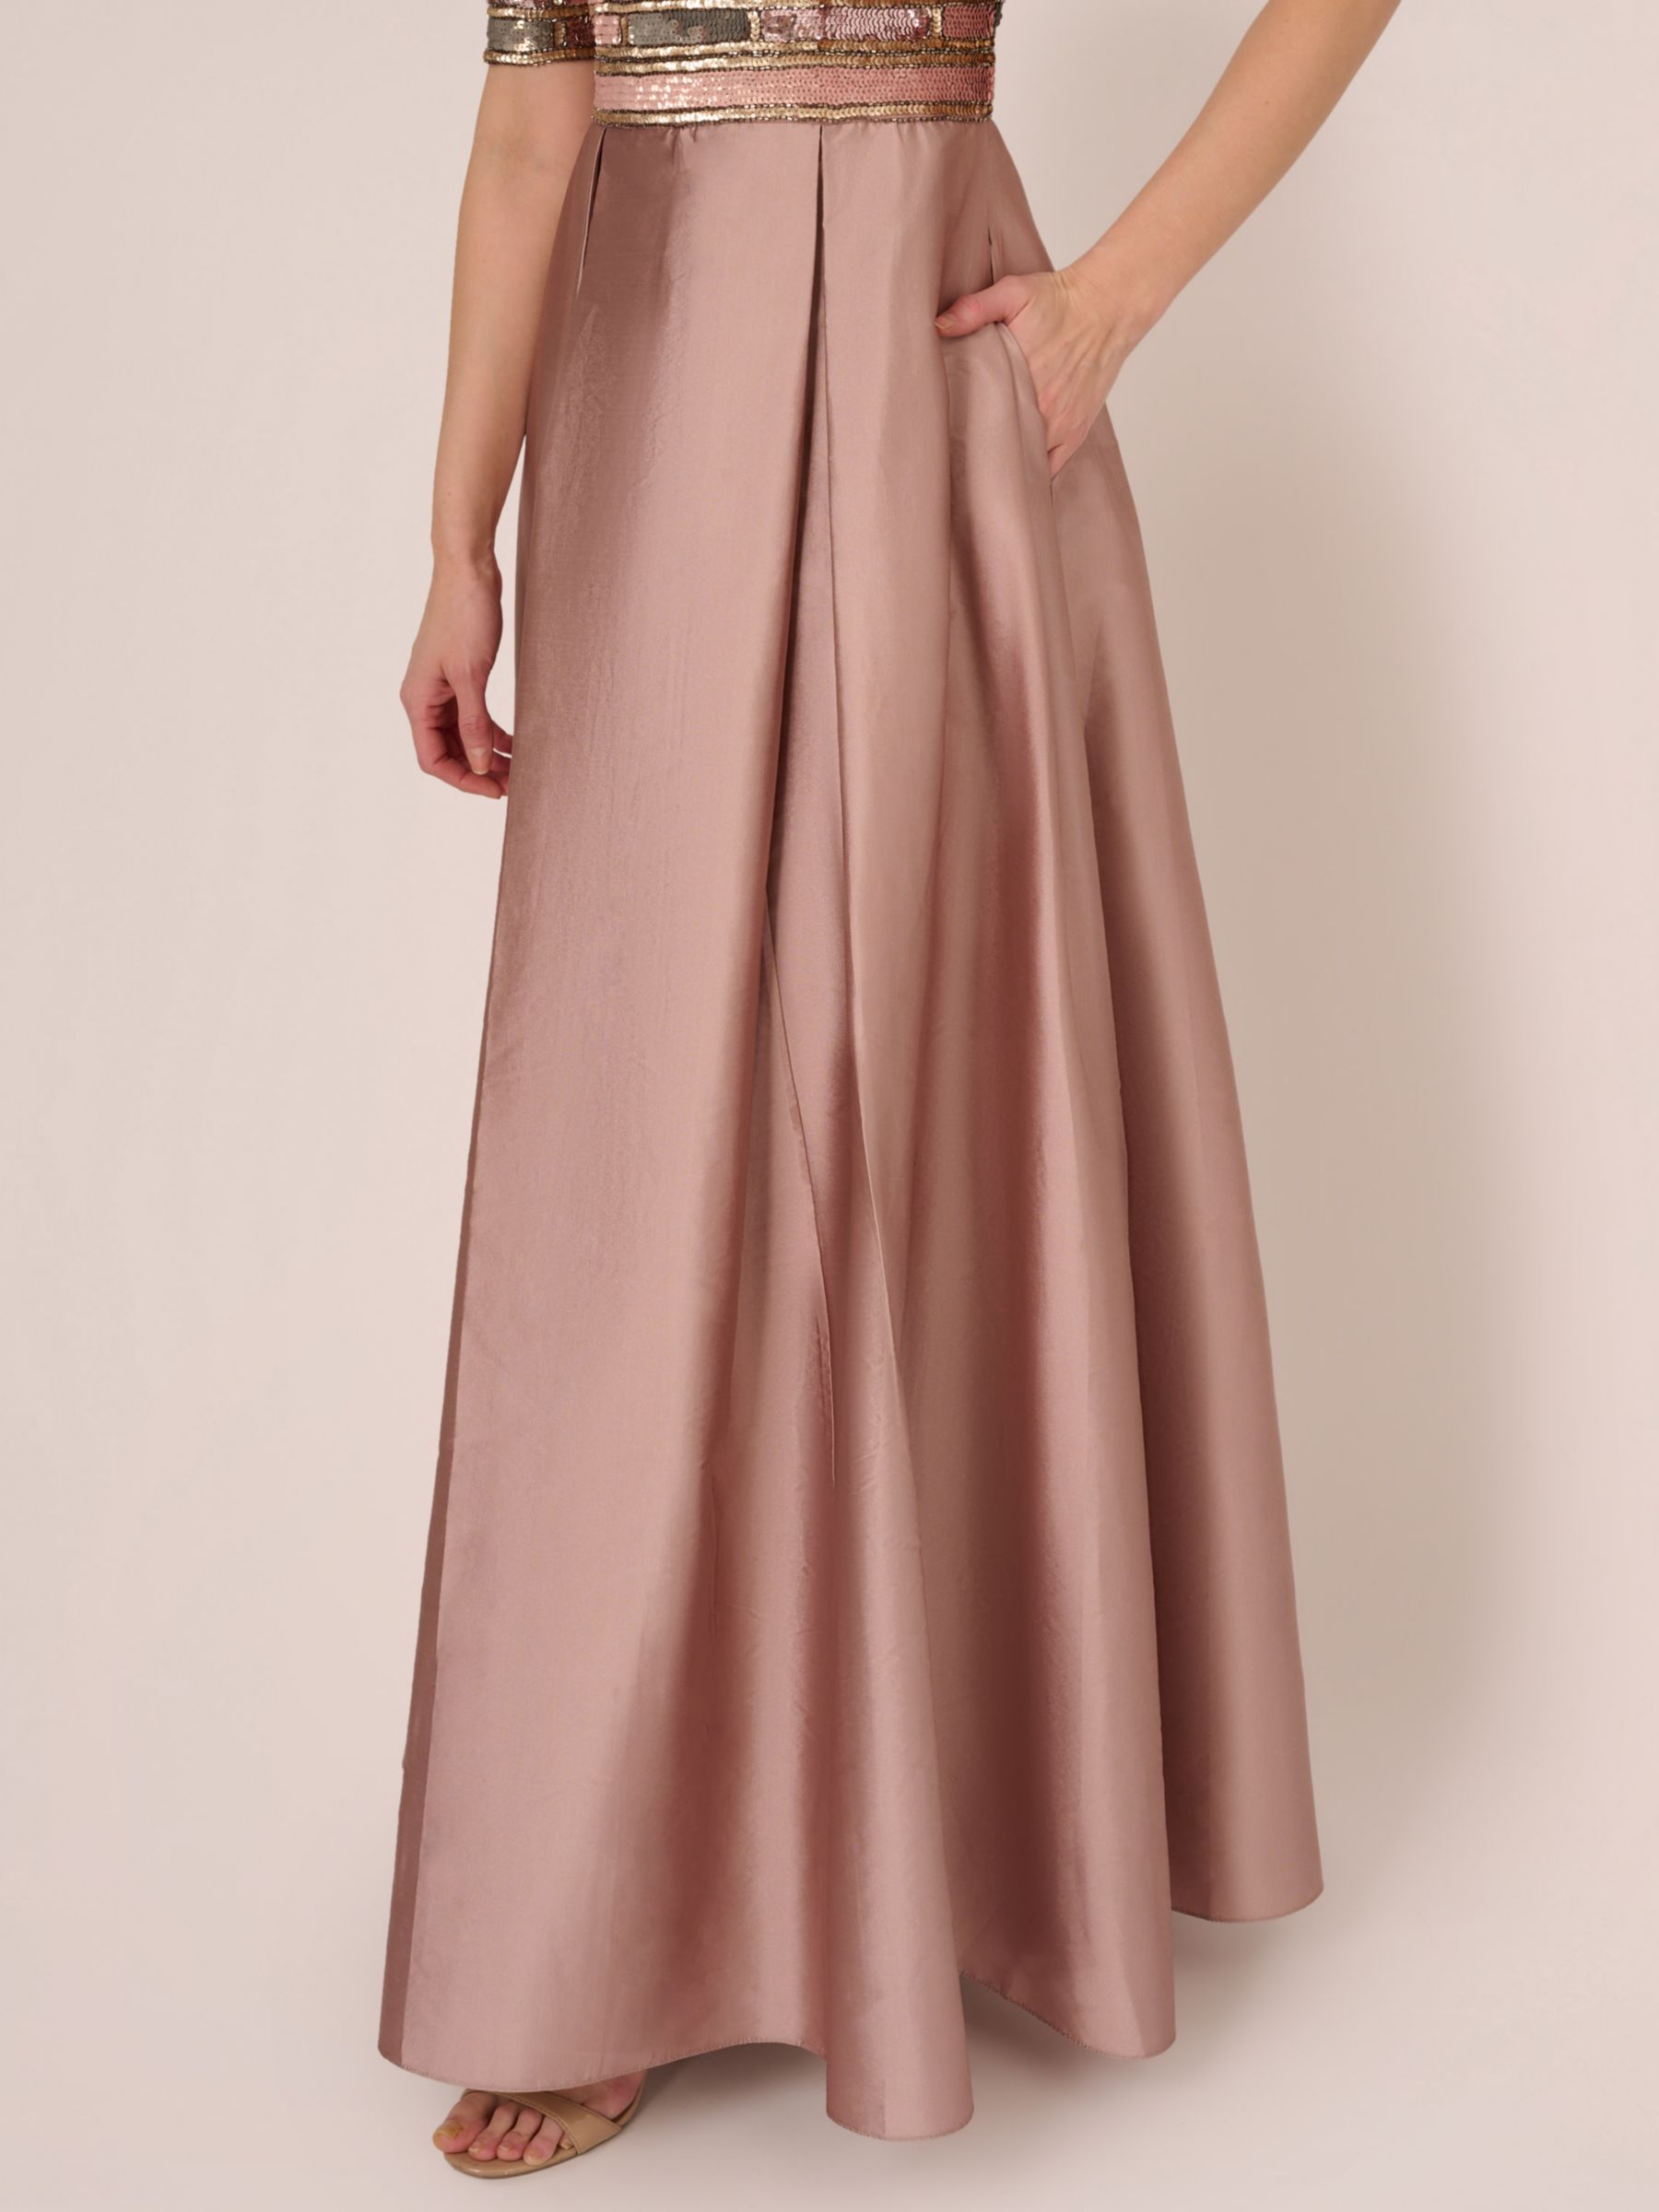 Adrianna Papell Embellished Tafetta Dress Maxi Dress, Stone, 6